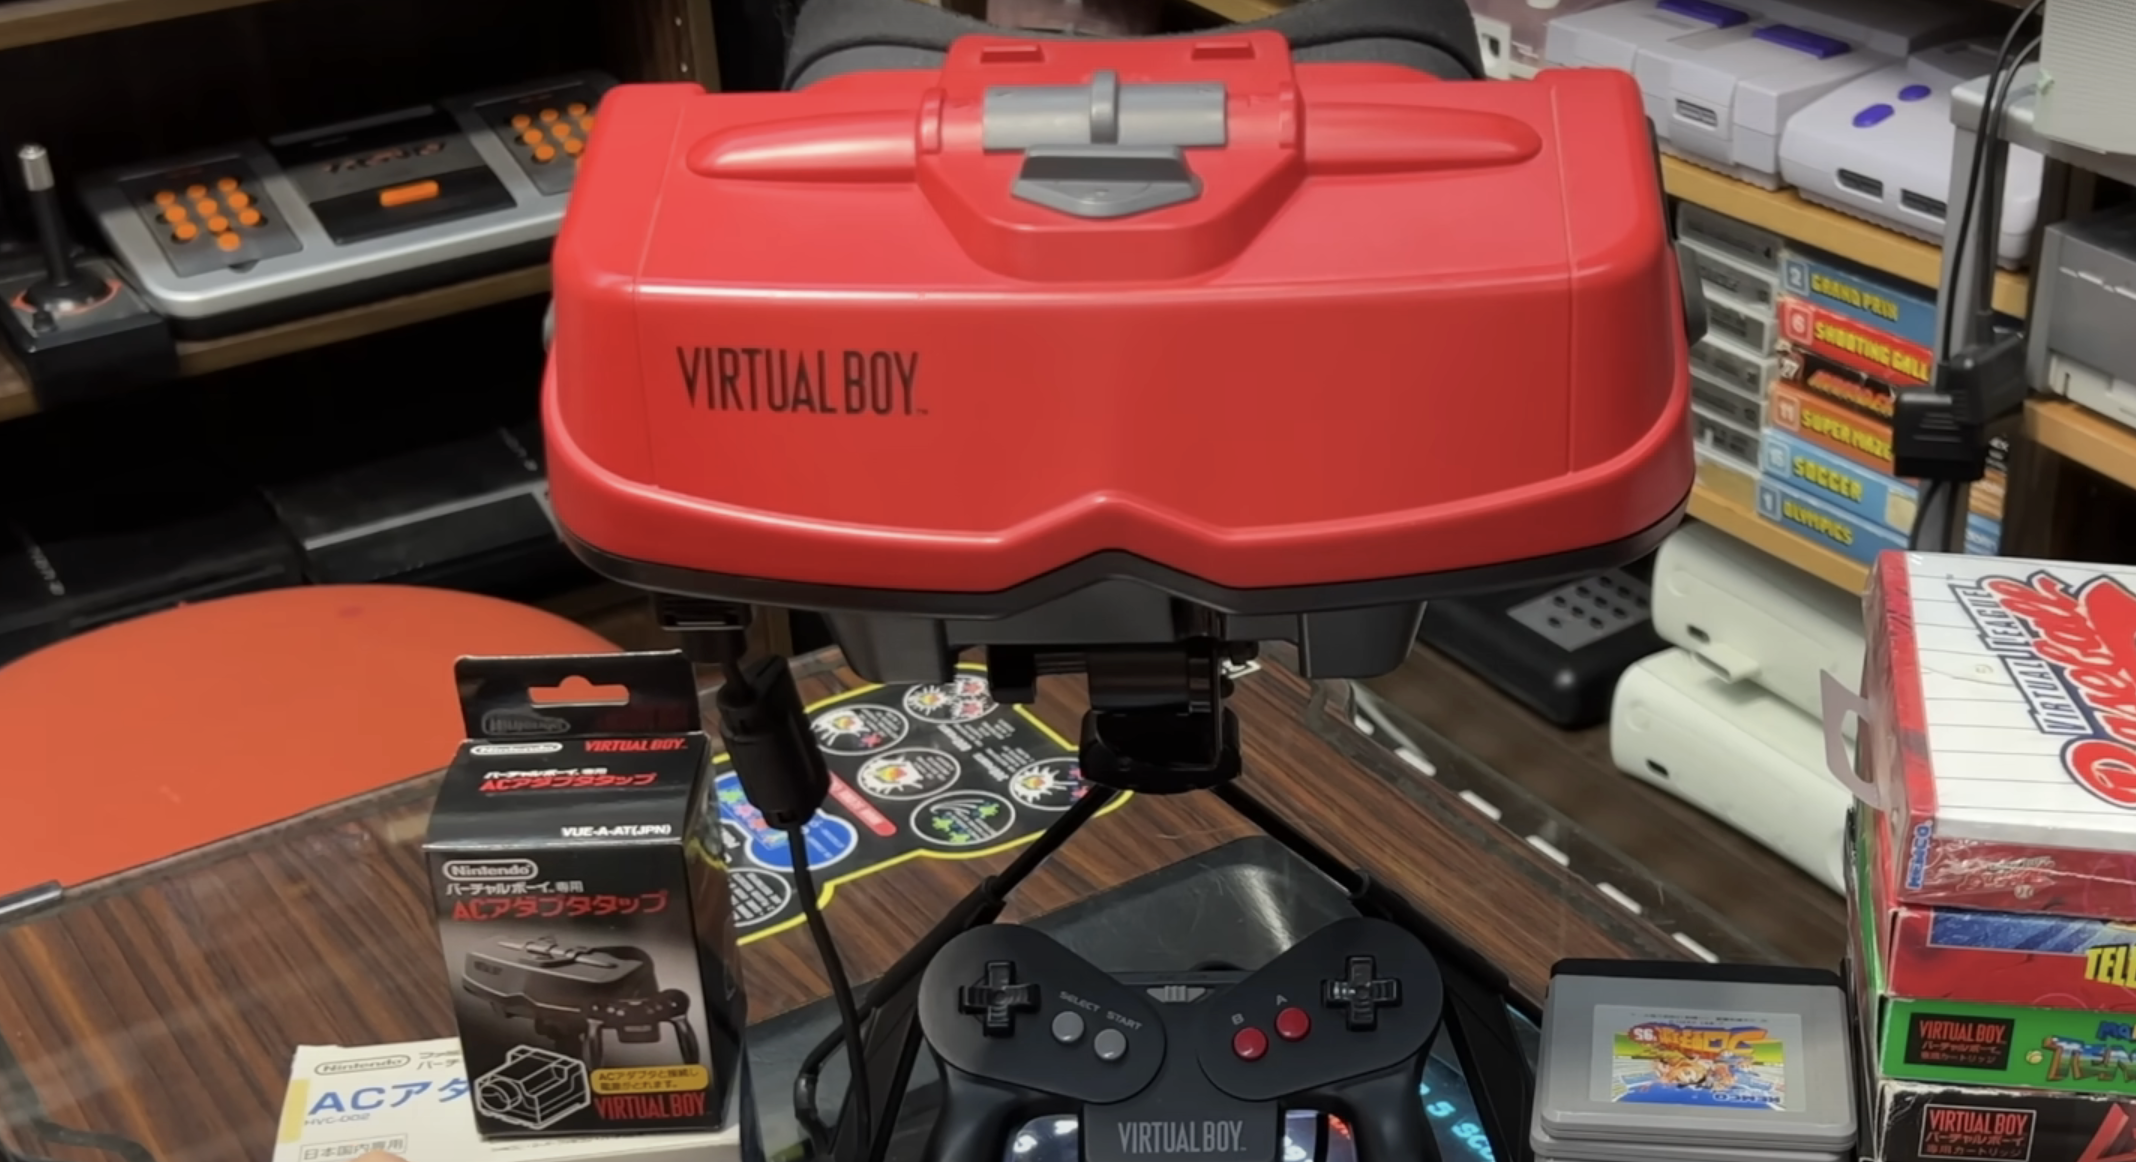 Virtual Boy gaming system